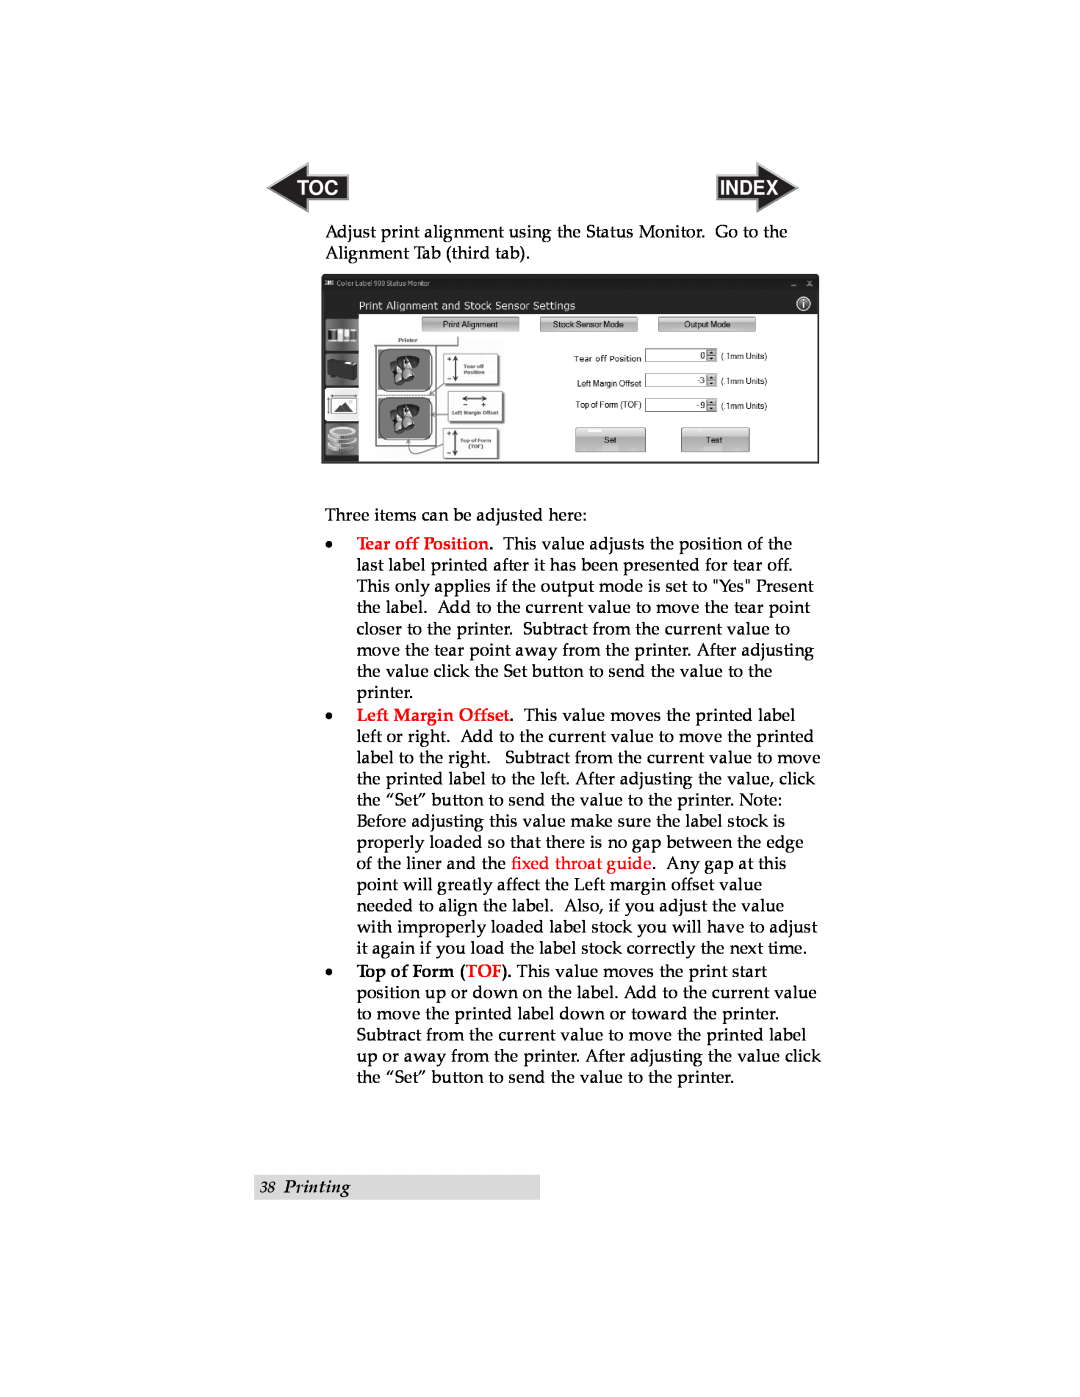 Primera Technology RX900 user manual Printing, Index 